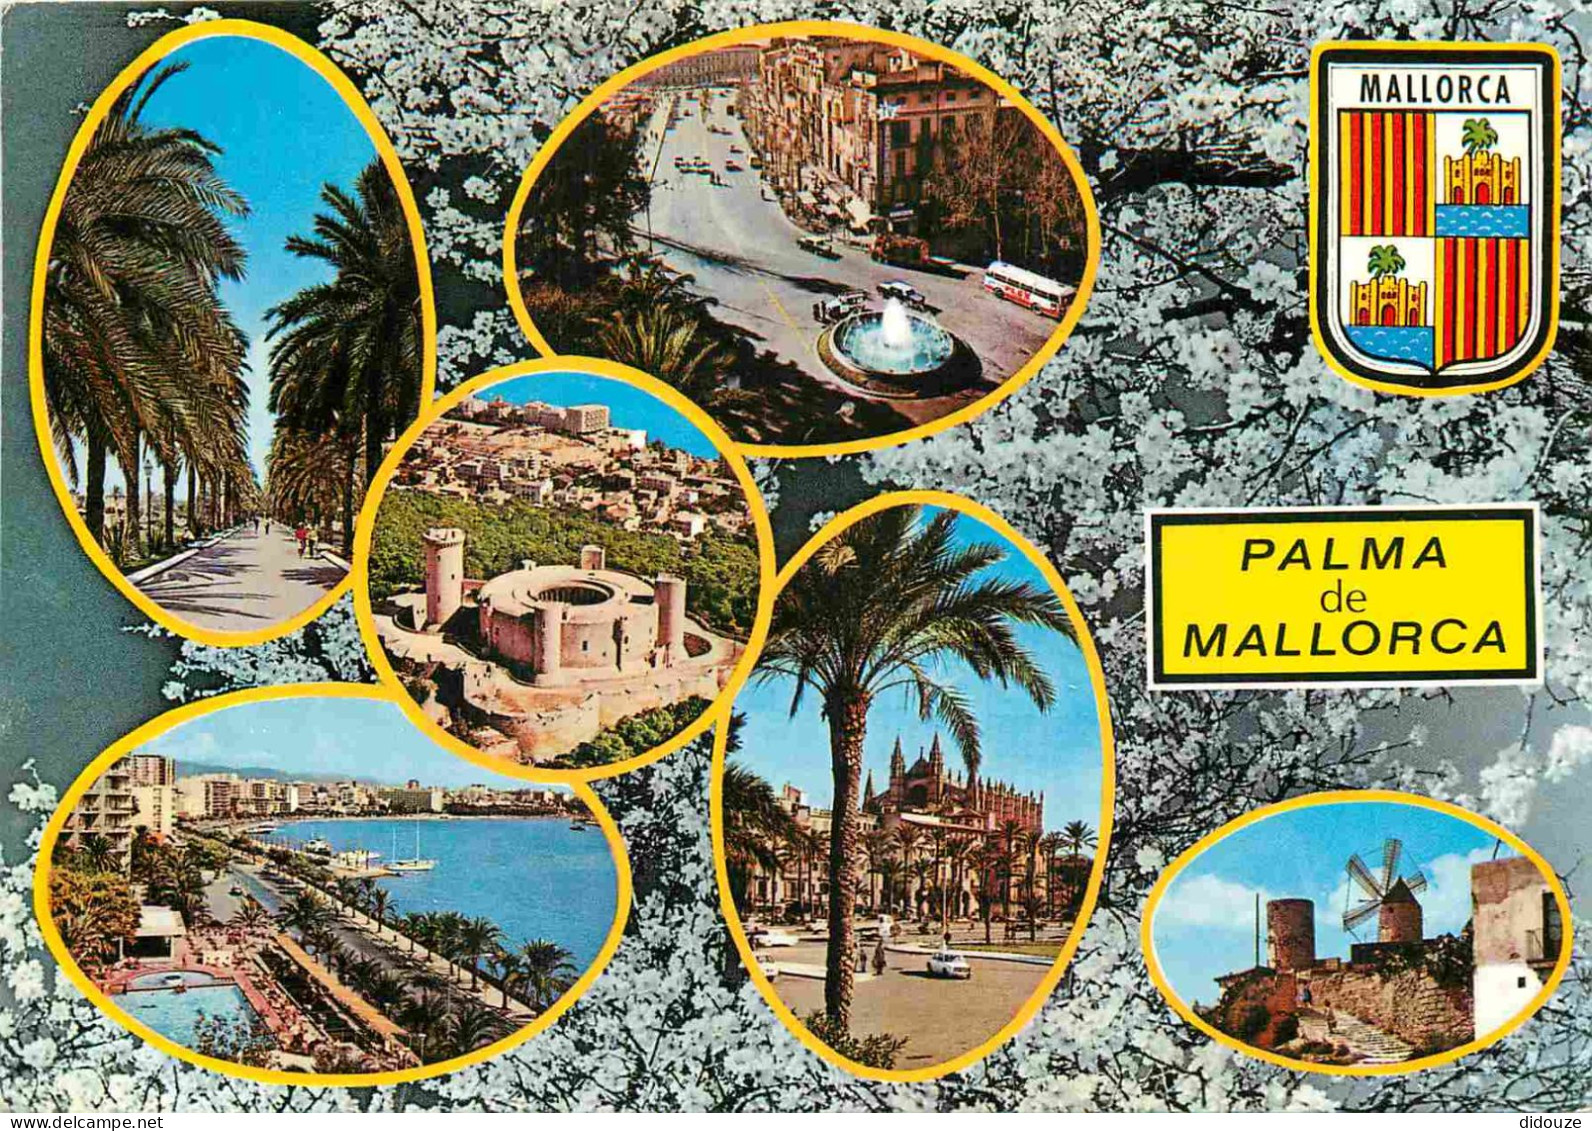 Espagne - Espana - Islas Baleares - Palma De Mallorca - Multivues - Blasons - CPM - Voir Scans Recto-Verso - Palma De Mallorca